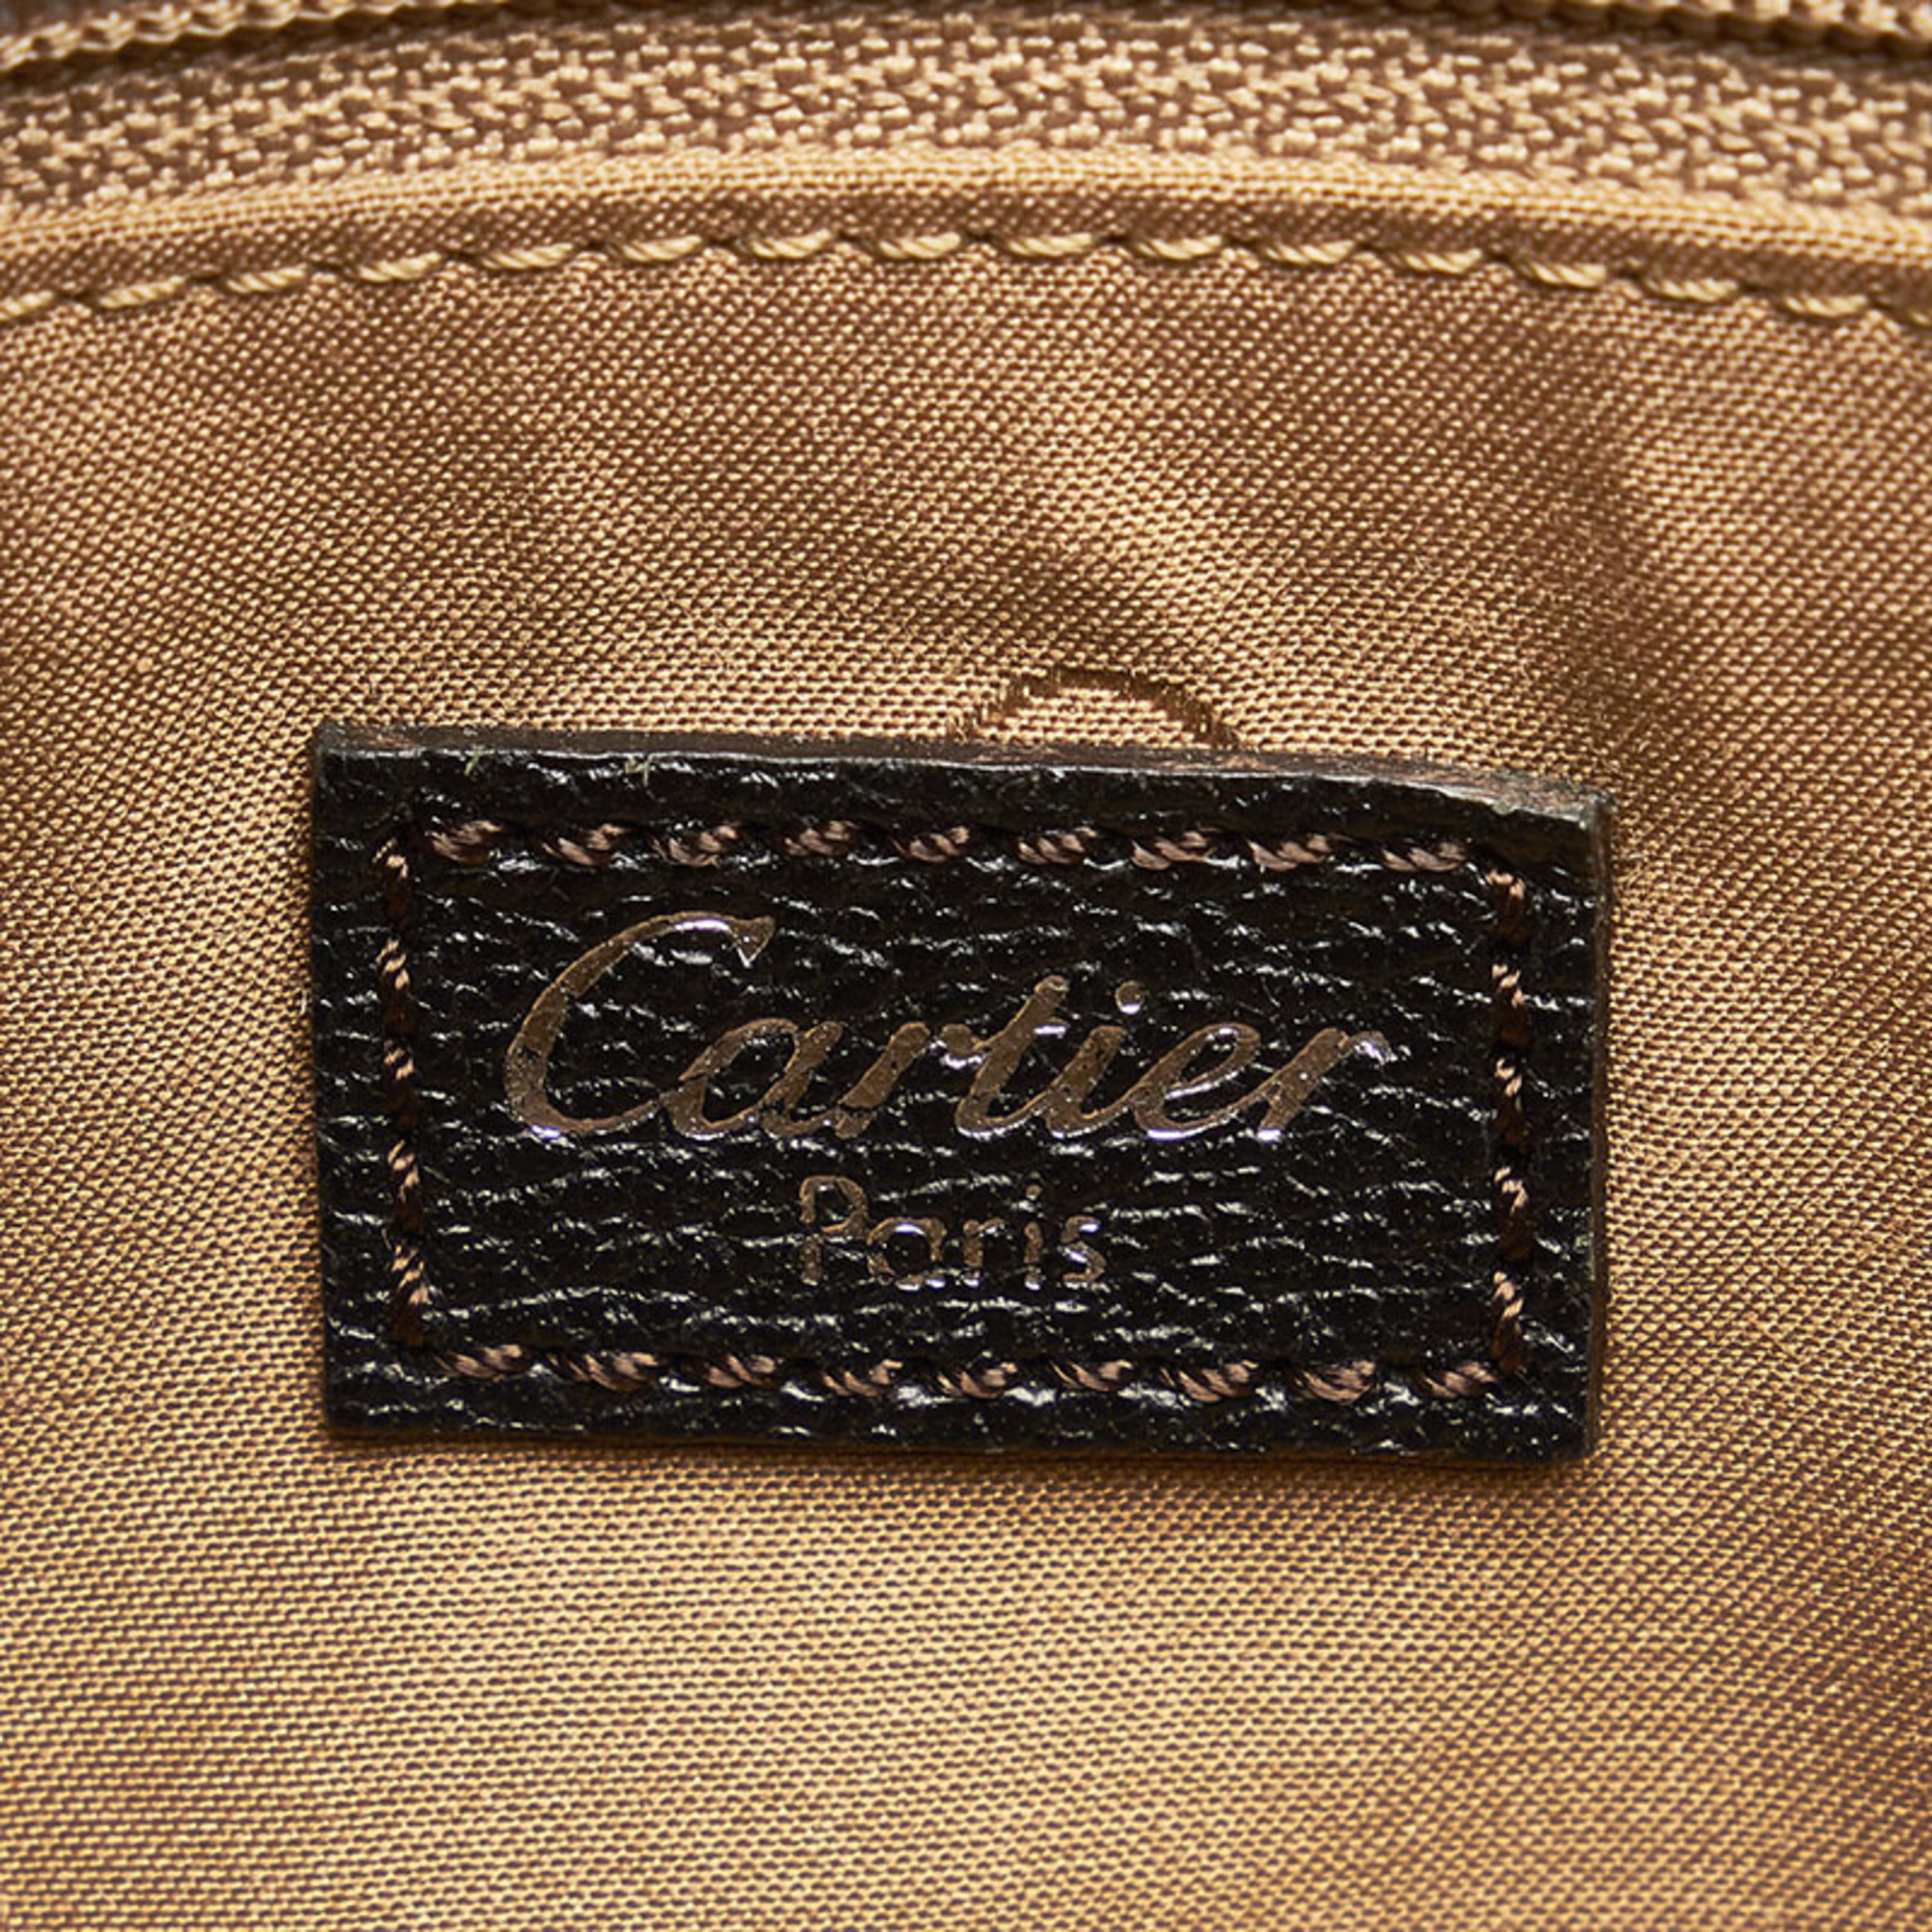 Cartier handbag shoulder bag brown leather ladies CARTIER